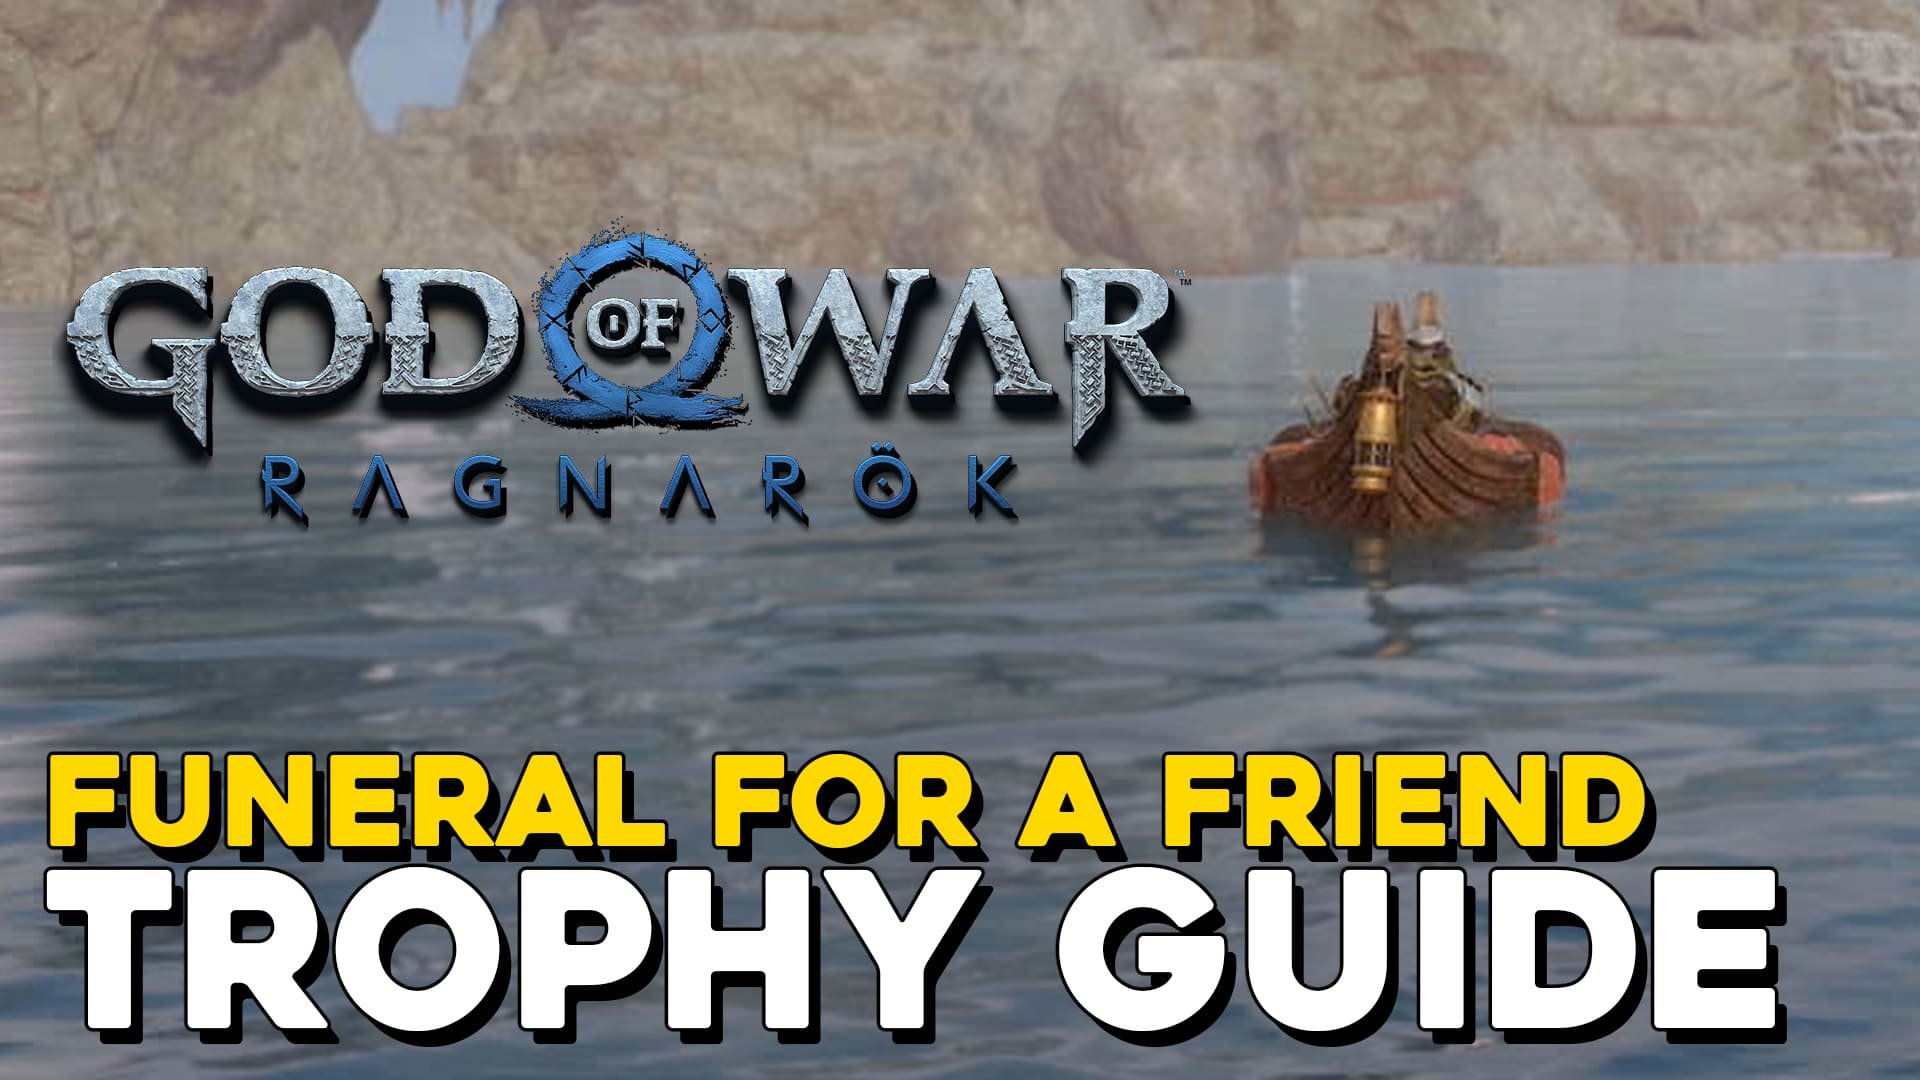 God Of War Ragnarok Funeral For A Friend Trophy Guide (copia)